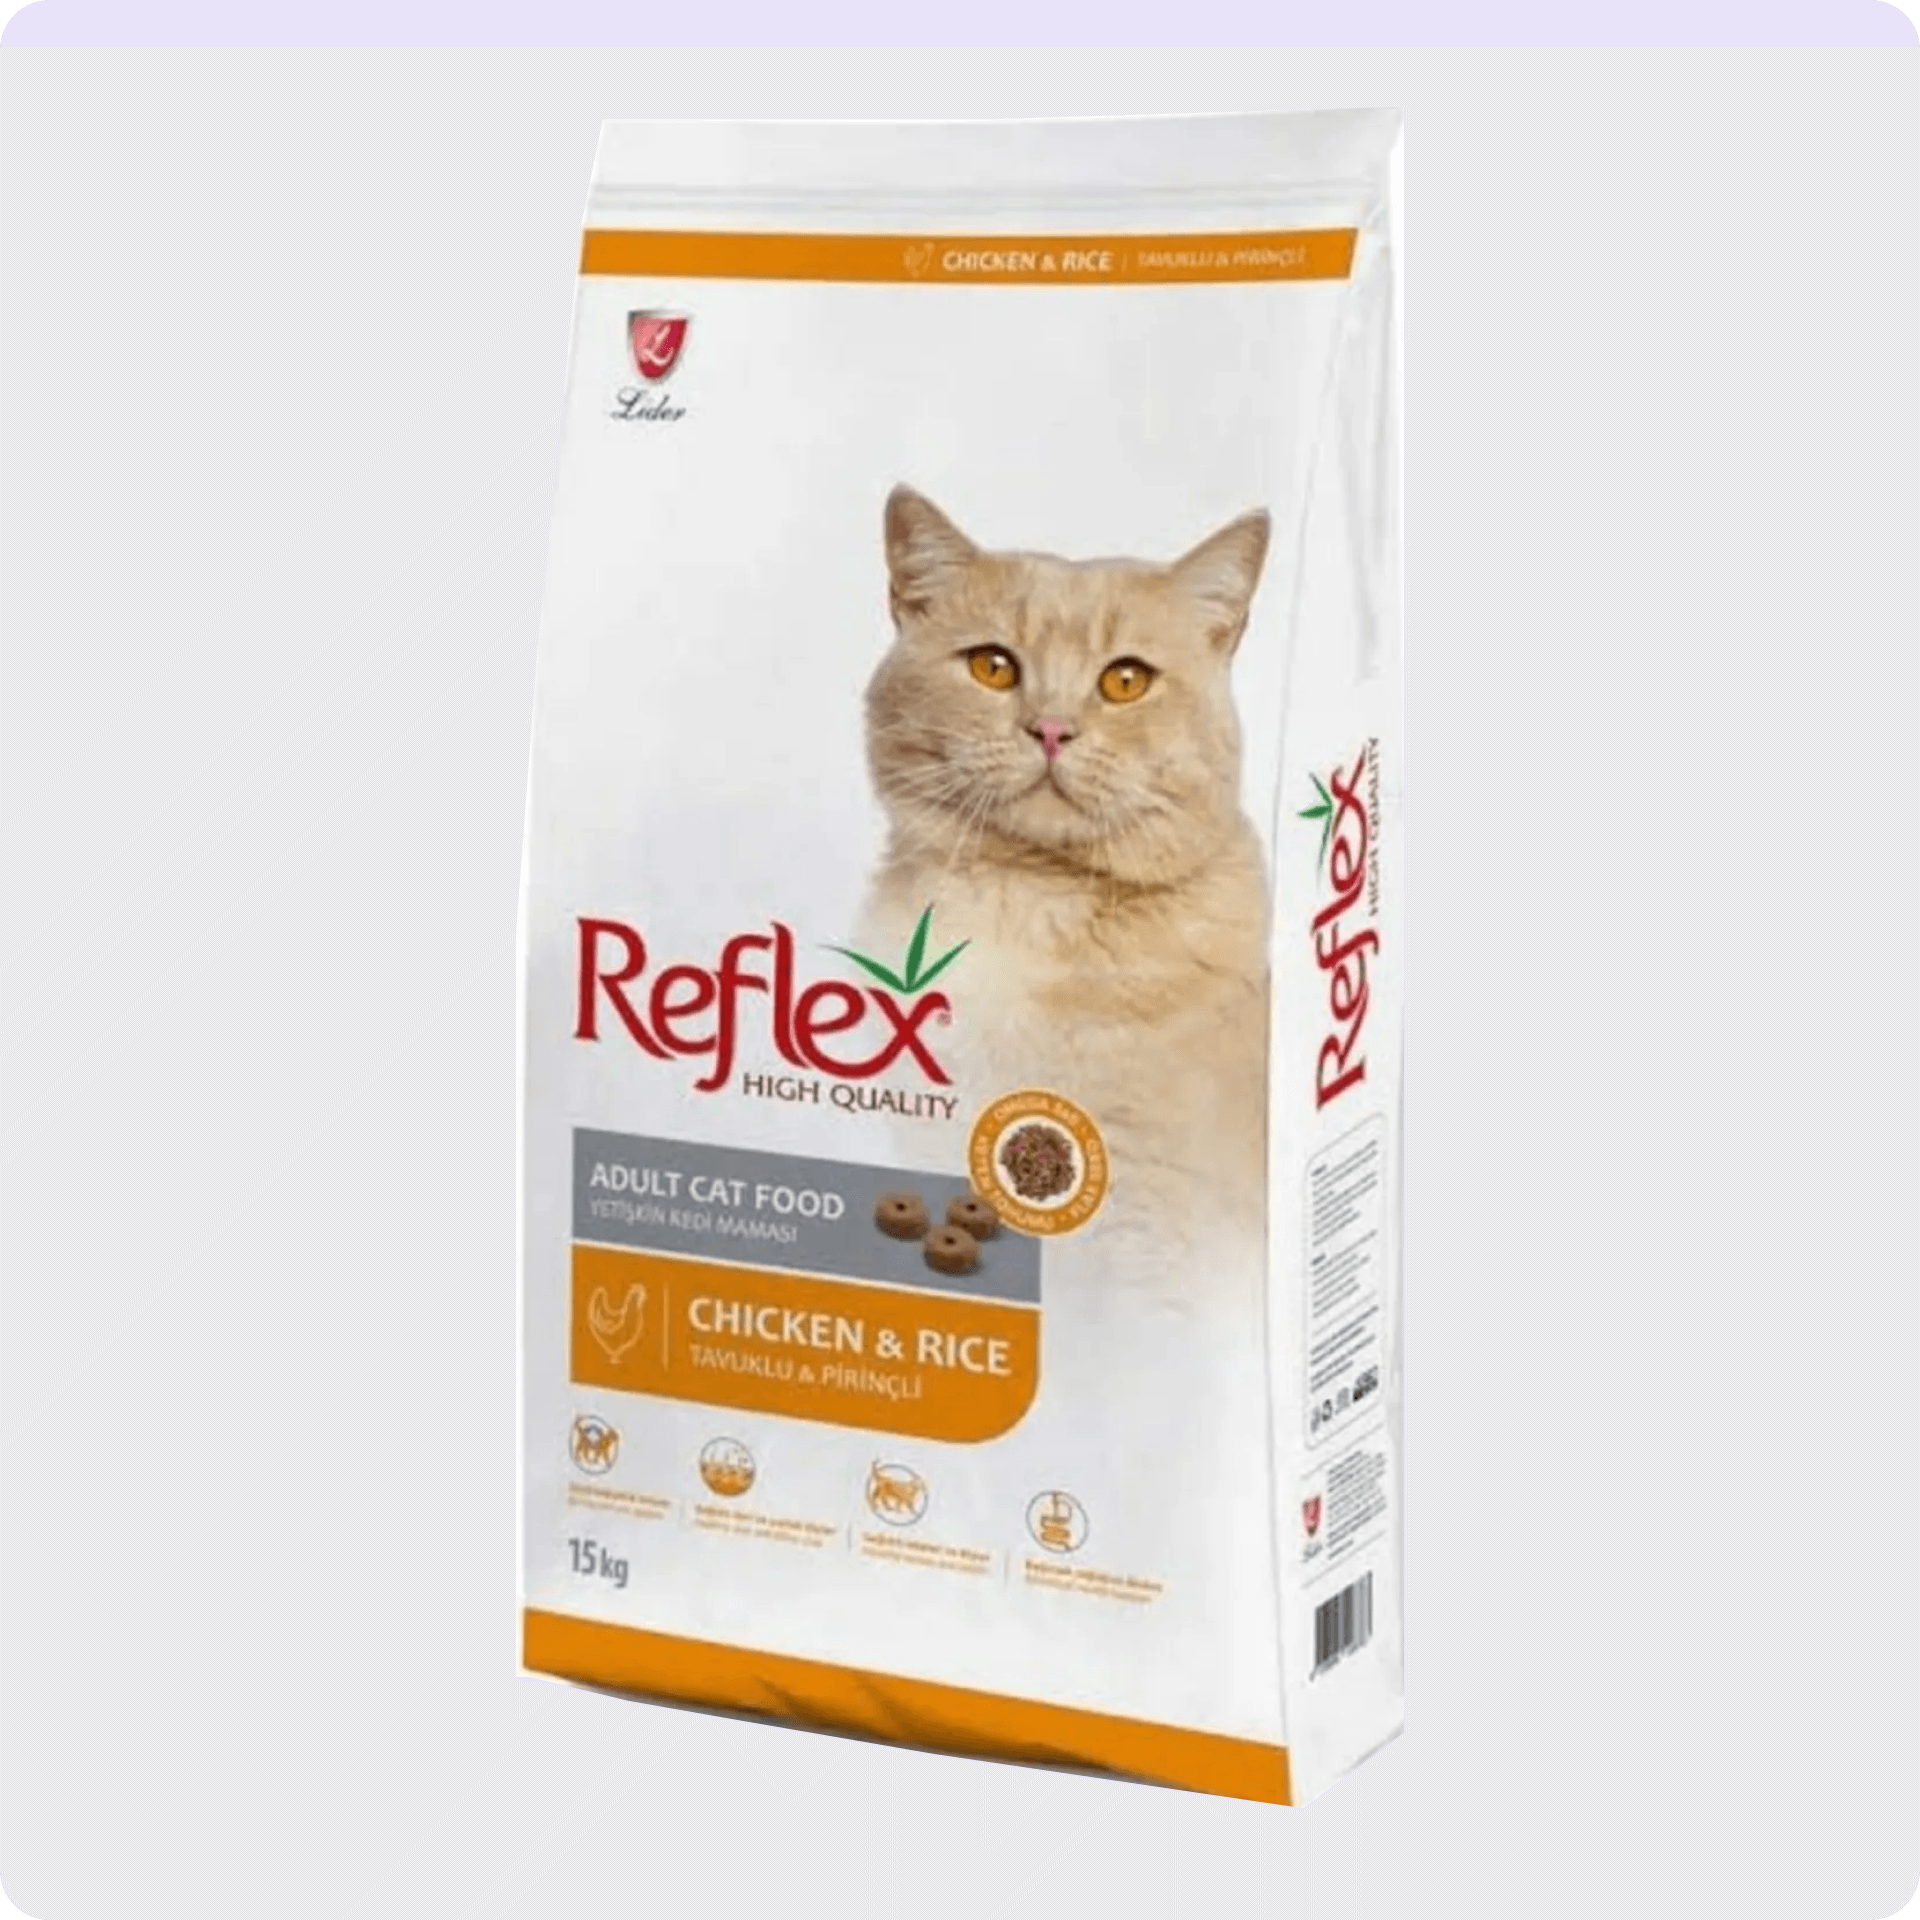 Reflex Tavuklu ve Pirinçli Yetişkin Kedi Maması 15 kg